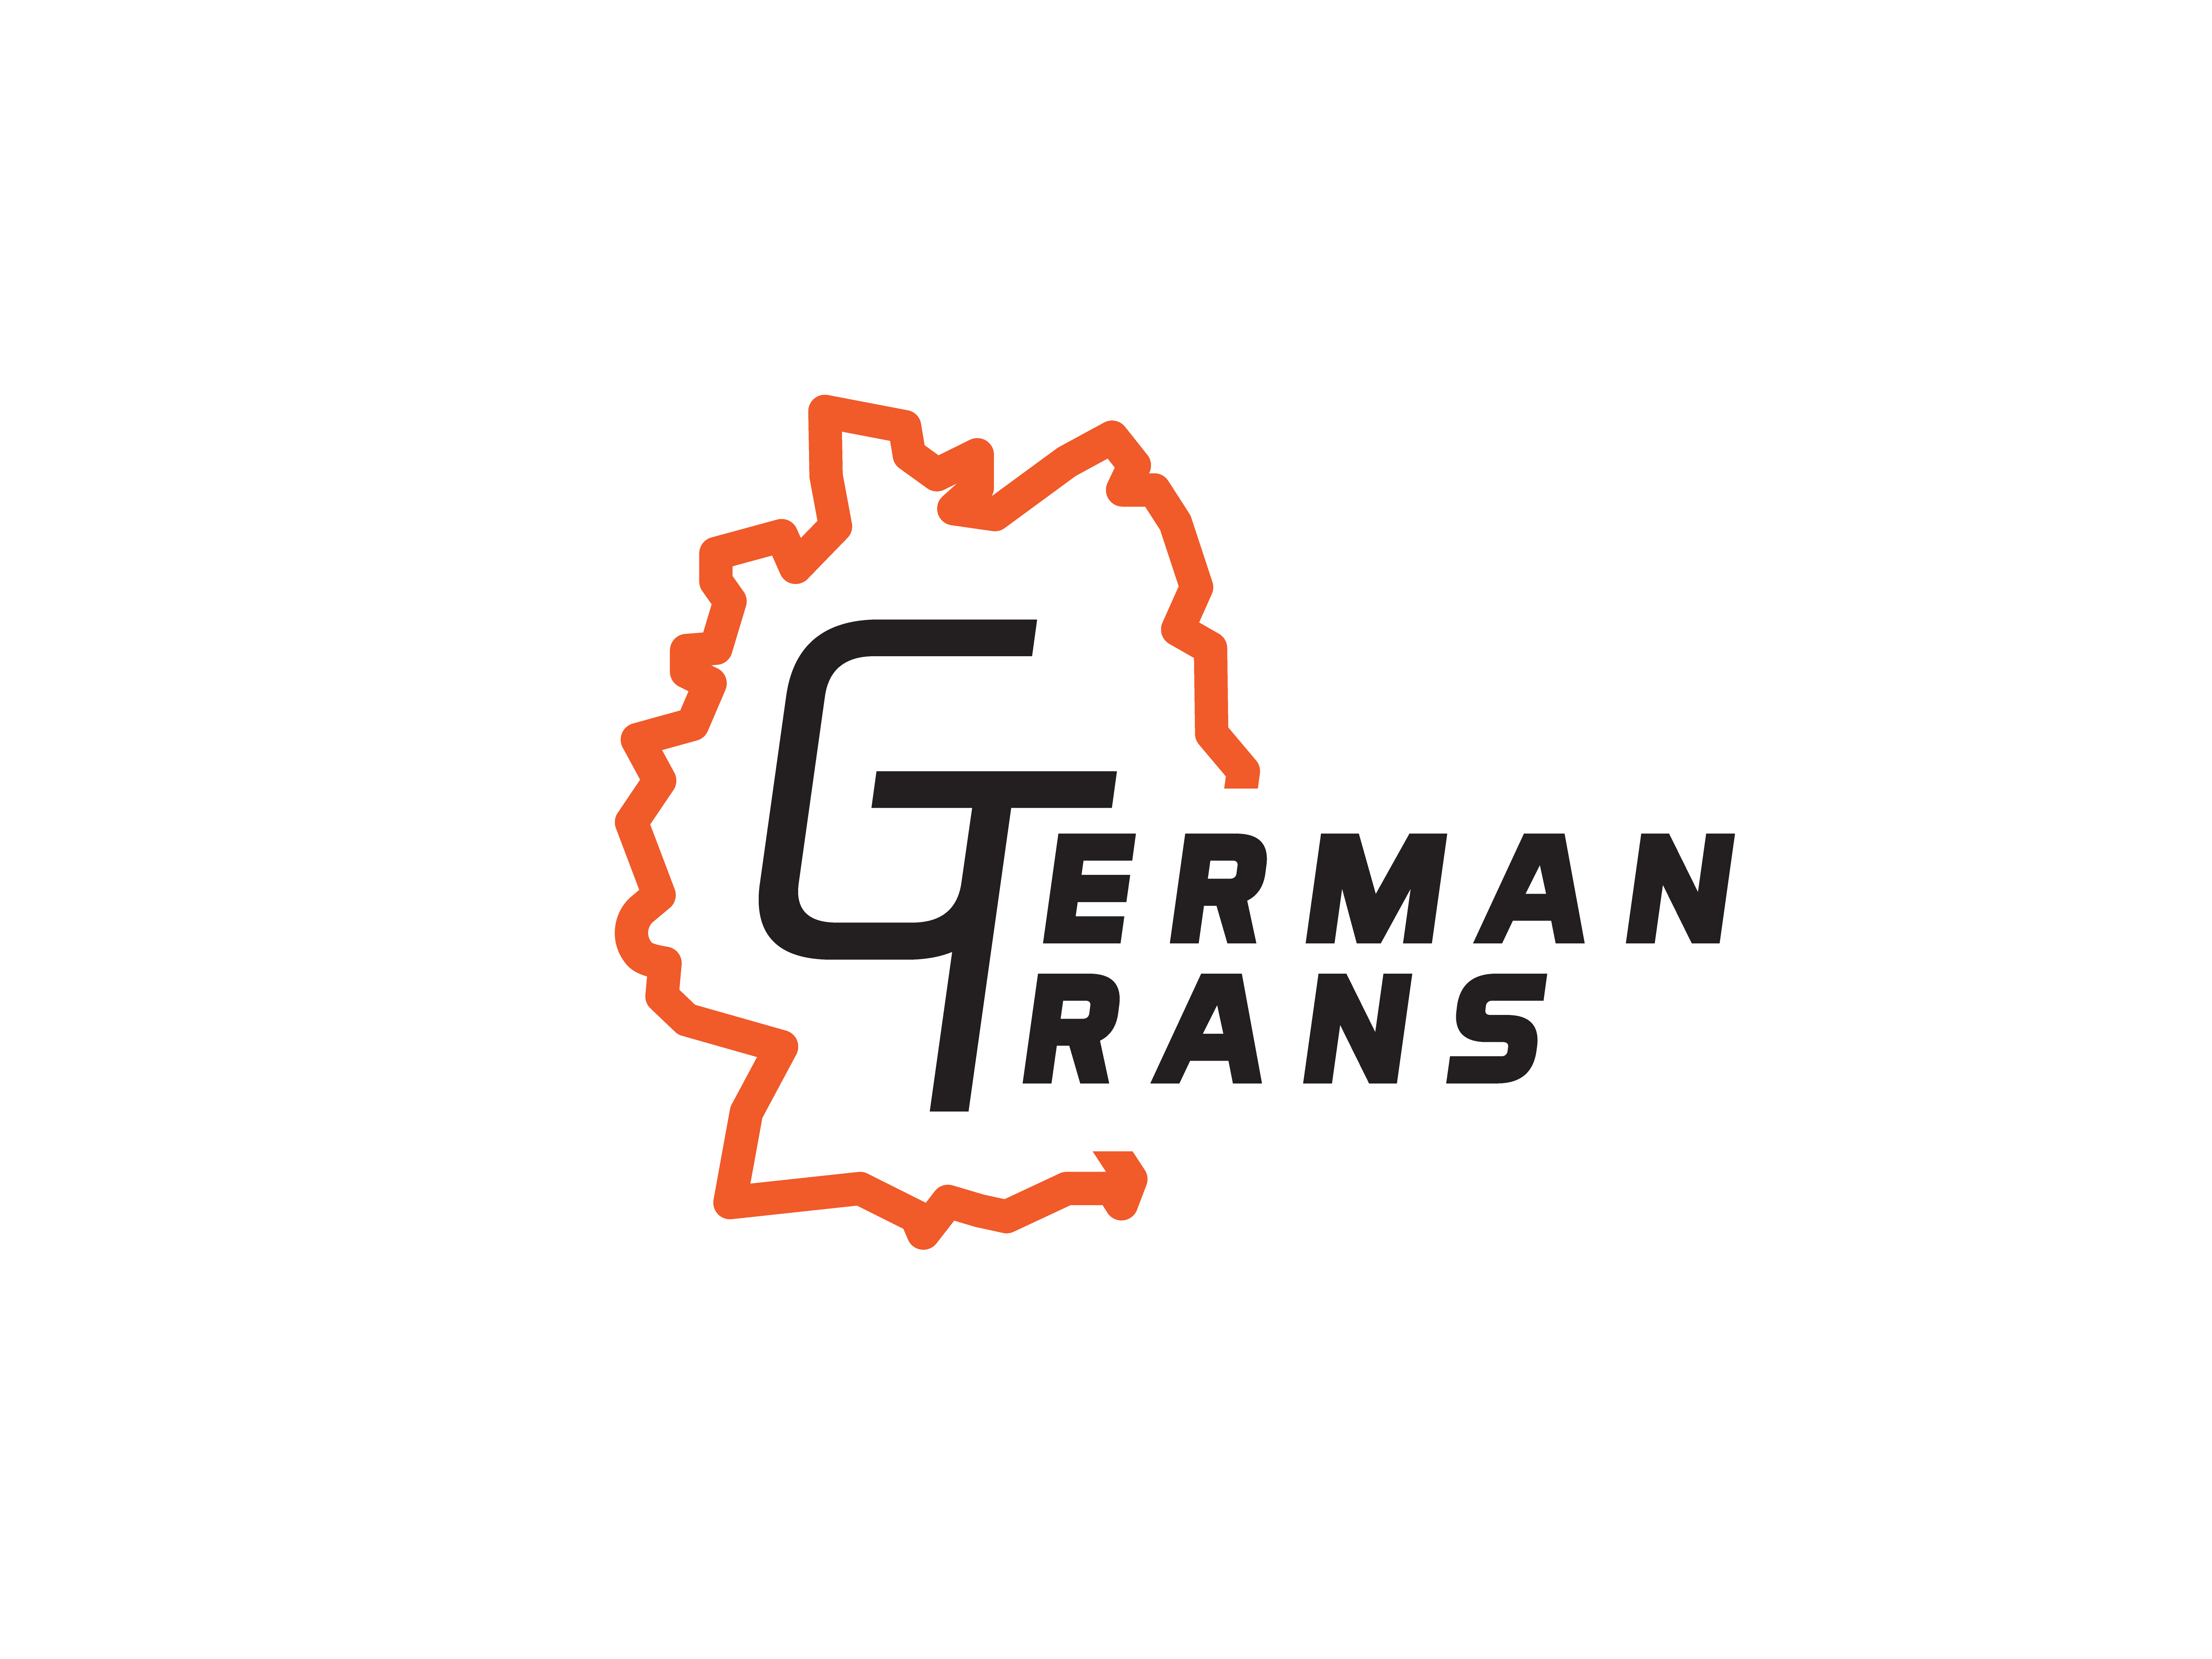 German Trans